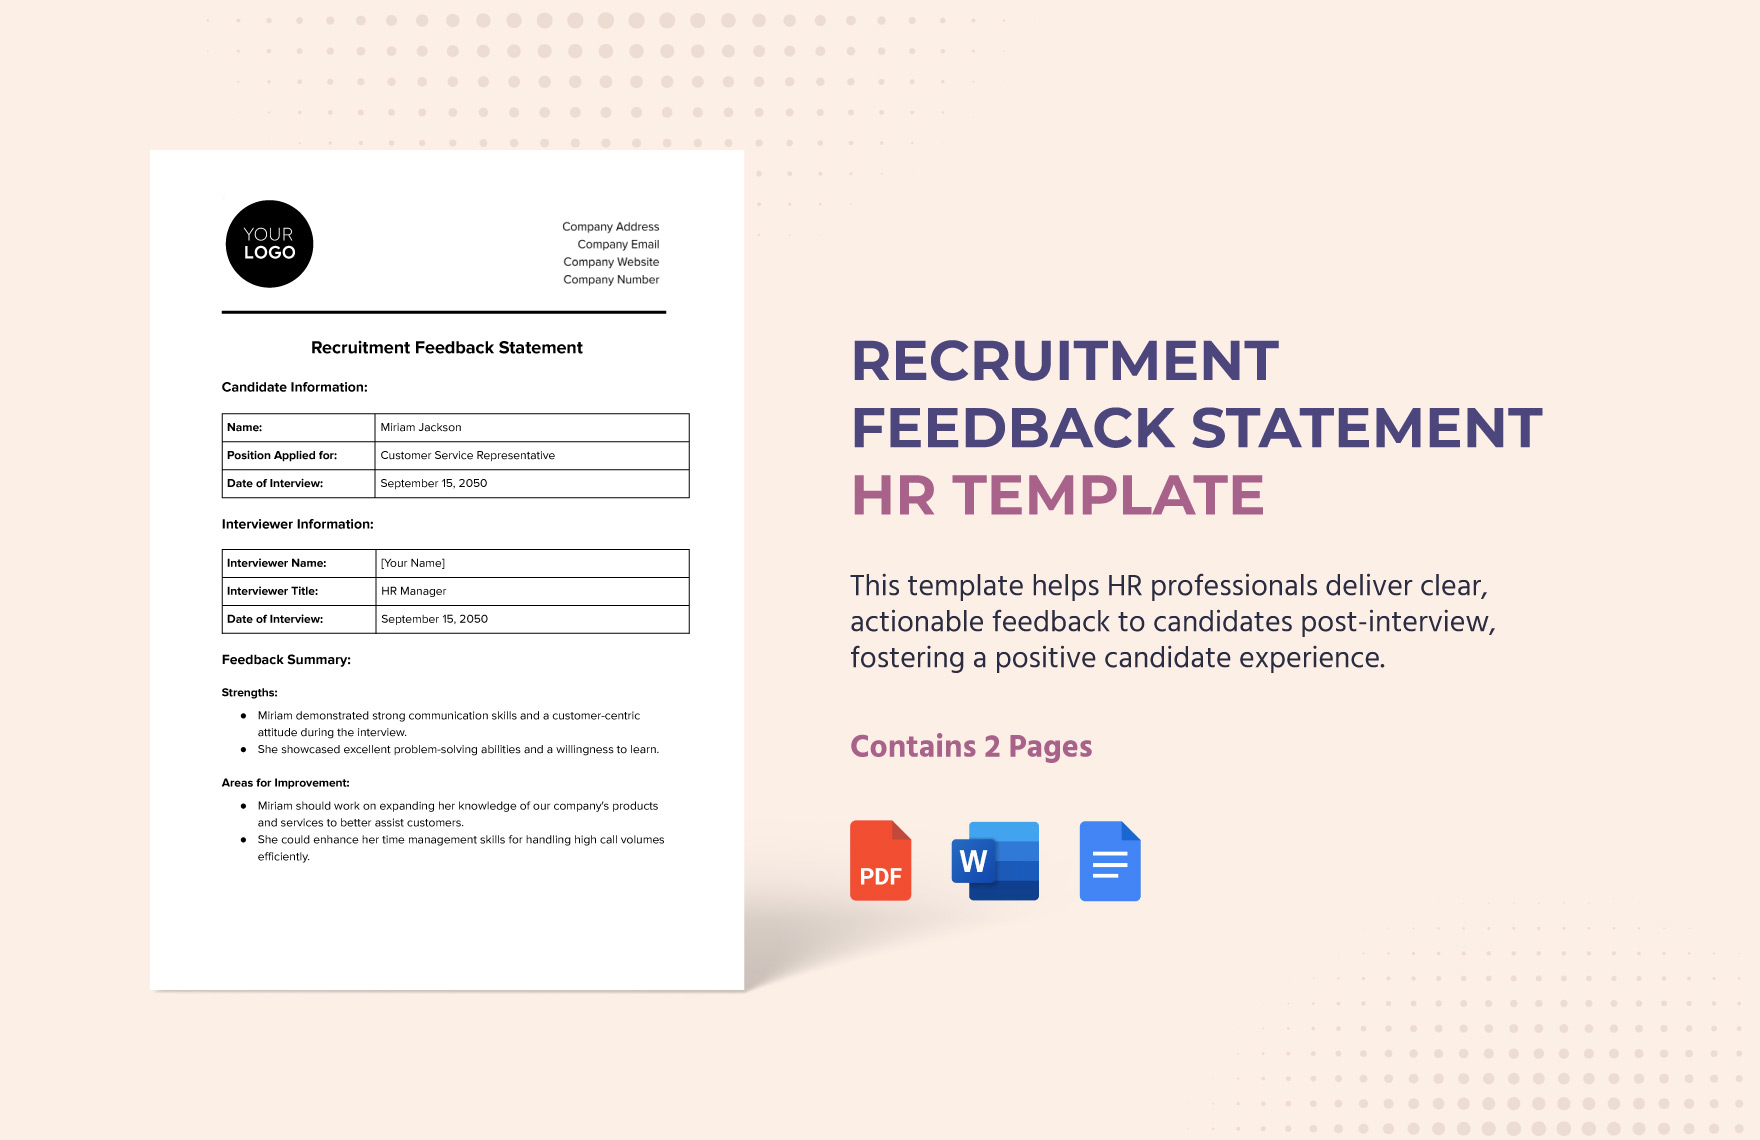 Recruitment Feedback Statement HR Template